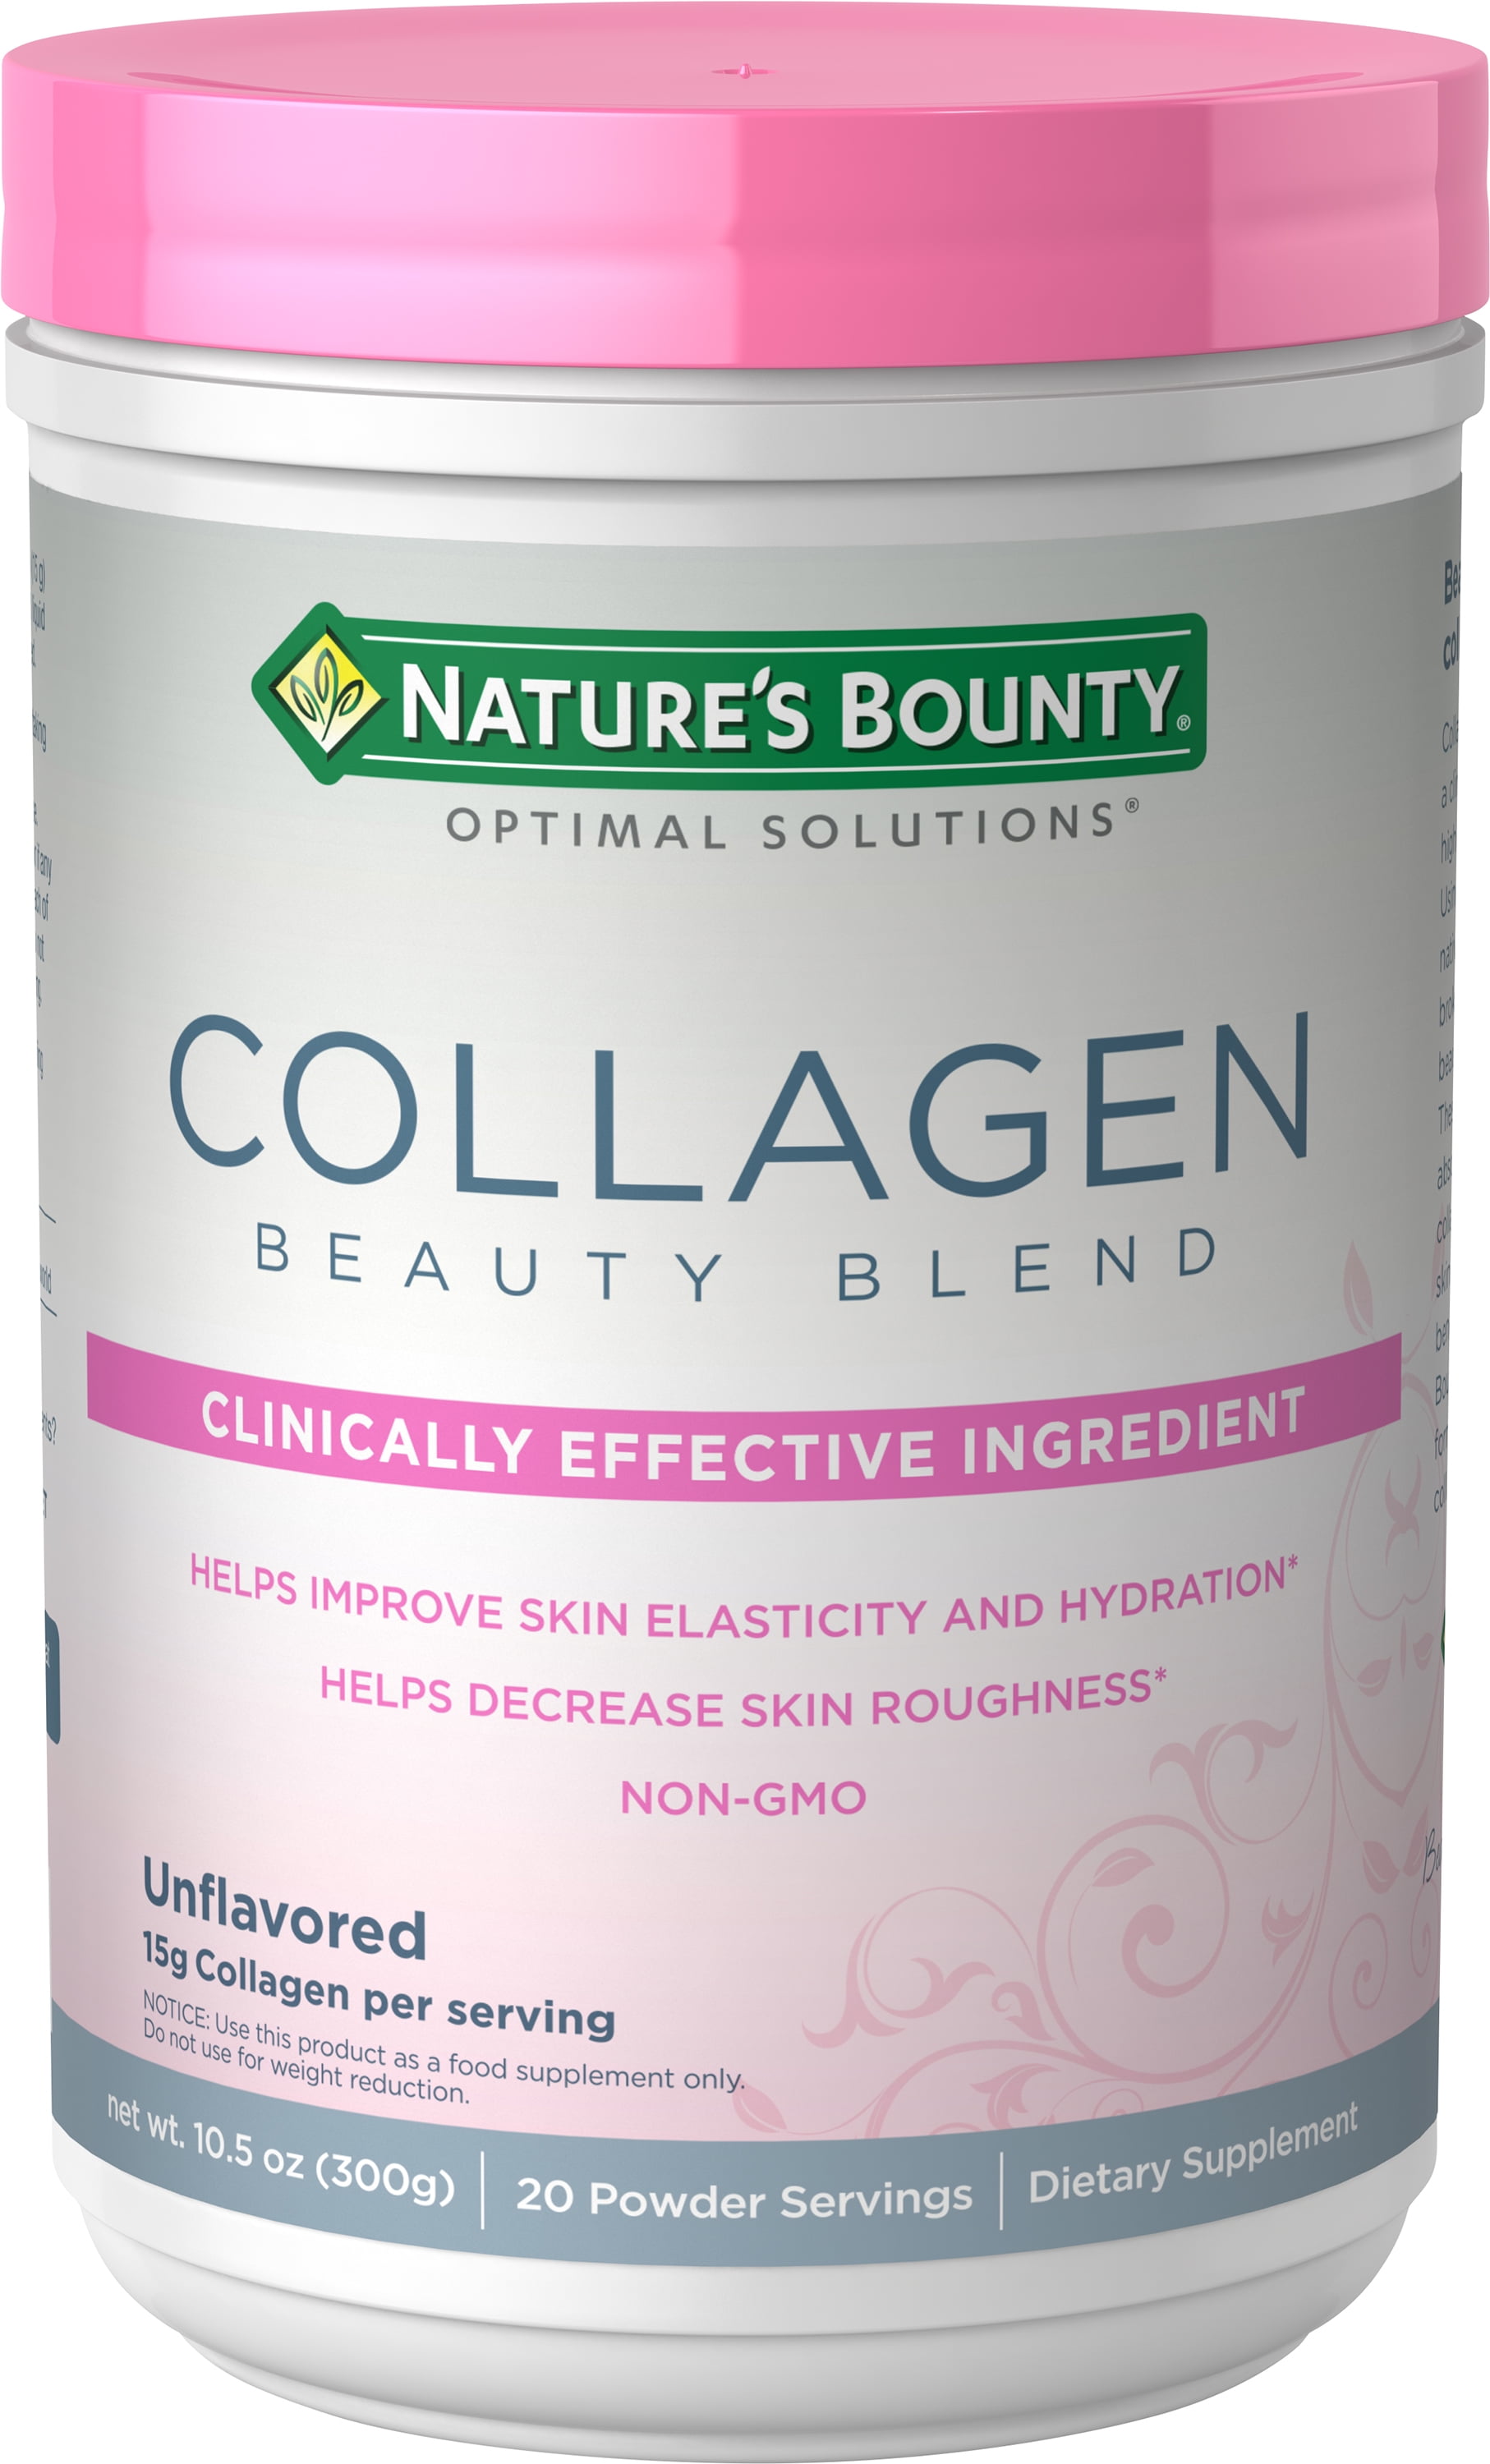 Nature's BountyÂ® Collagen Beauty Blend, Unflavored Powder, 15g Collagen, 20 servings - Walmart 